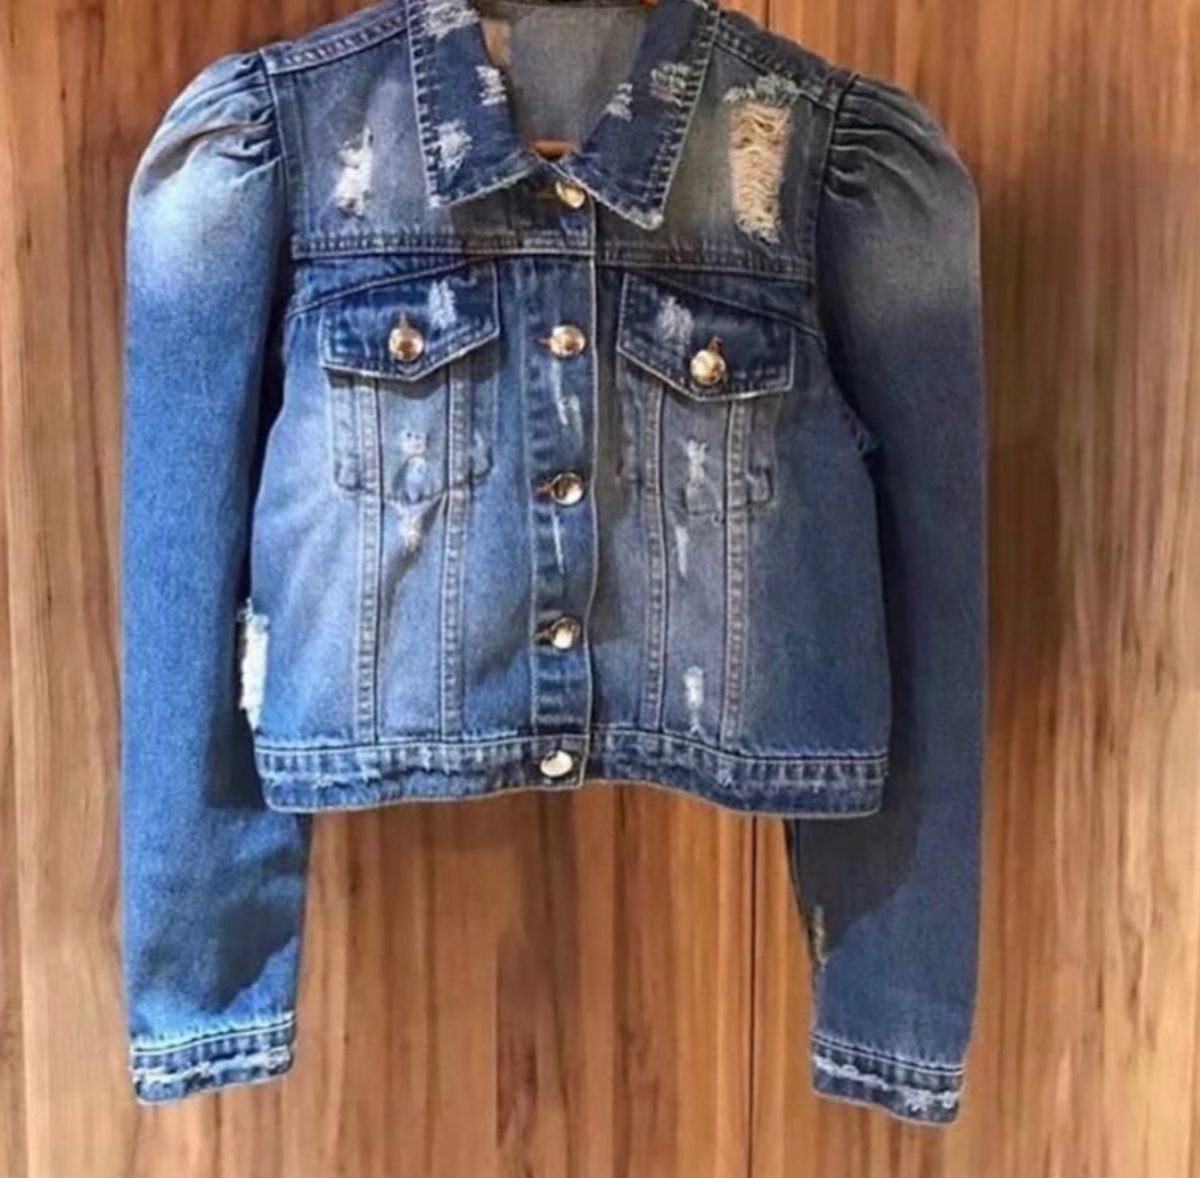 jaqueta jeans com manga